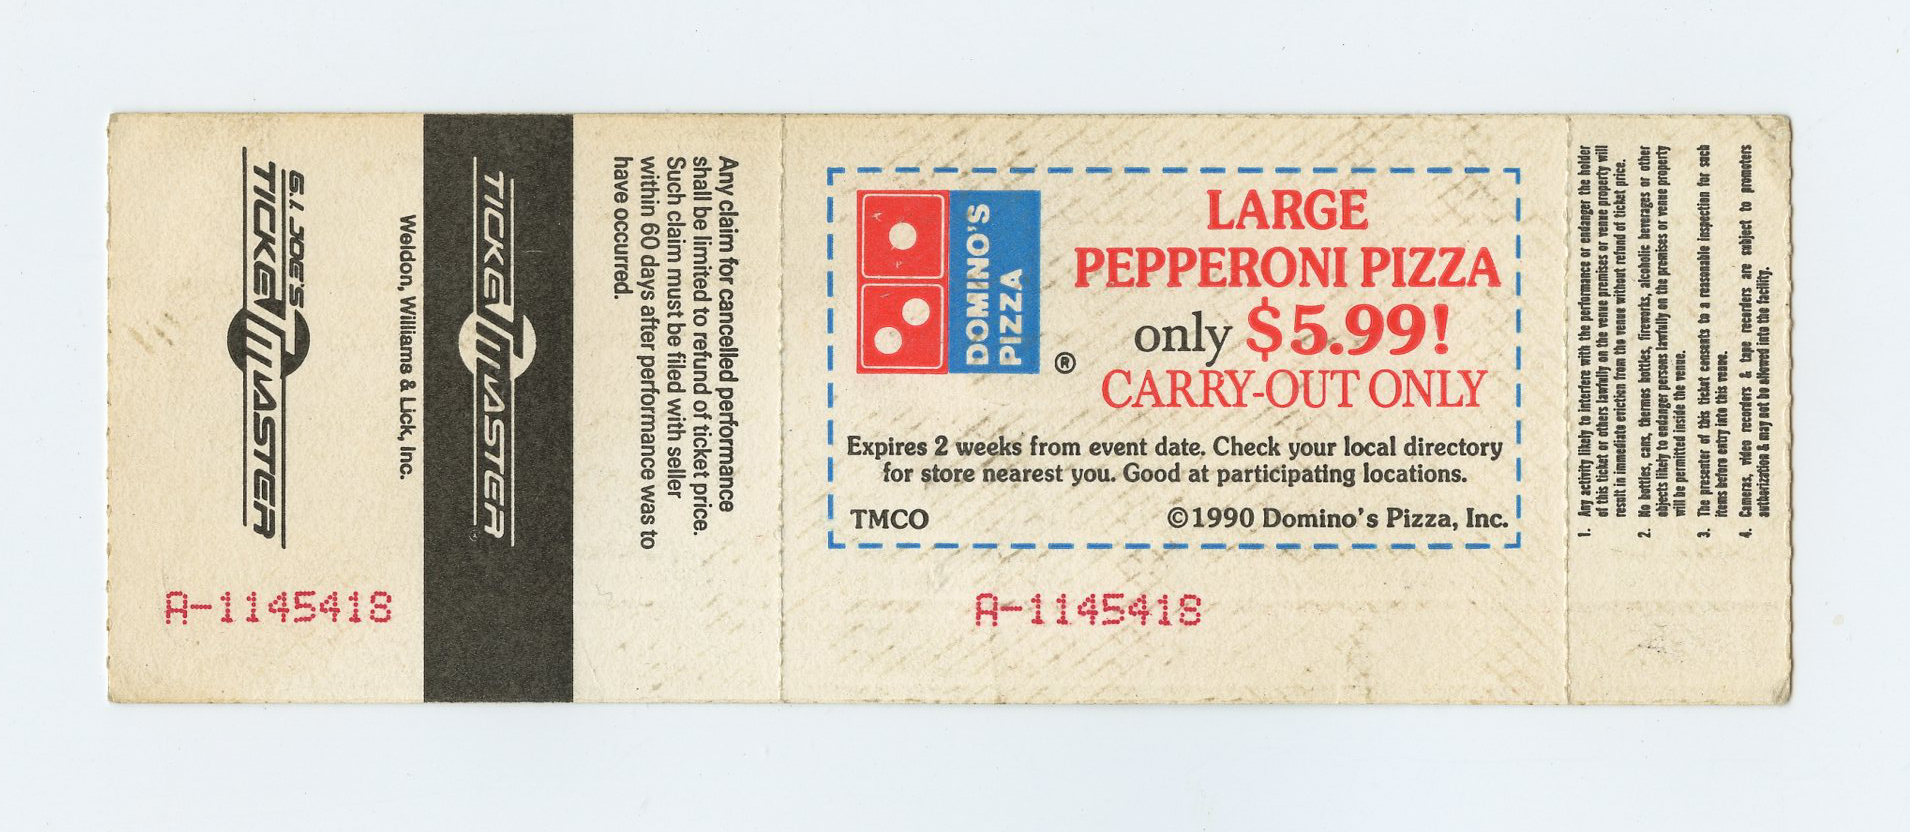 Clint Black Vintage Ticket 1991 Sep 14 Portland Memorial Coliseum 